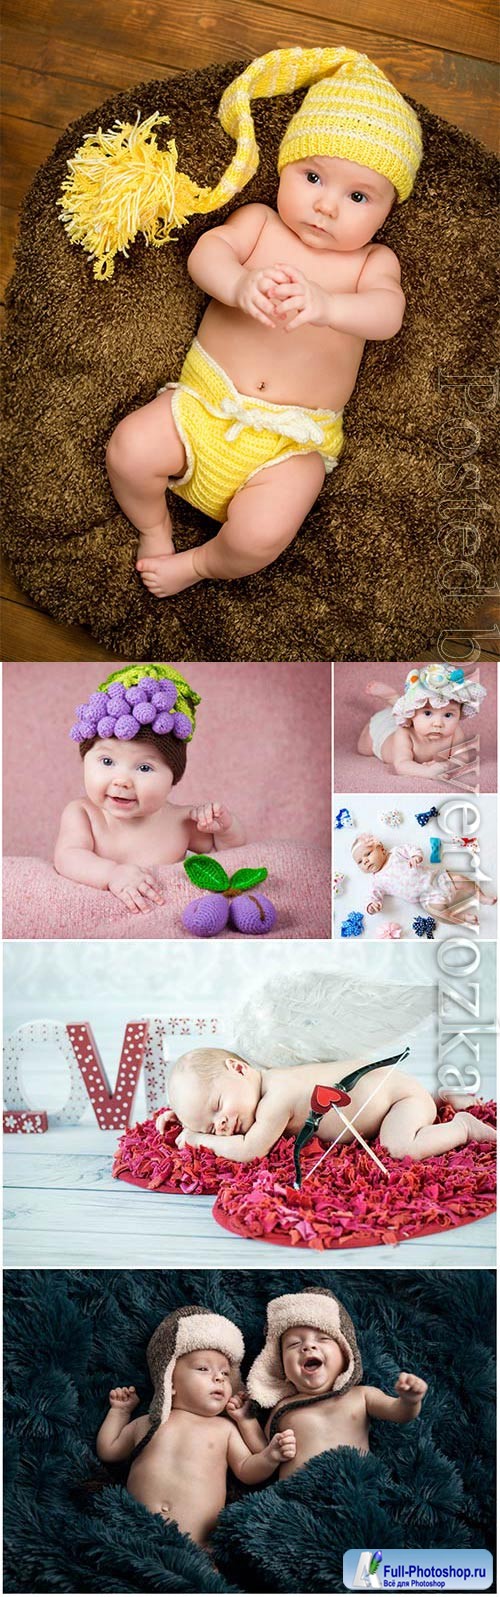 Cute little kids in funny hats stock photo